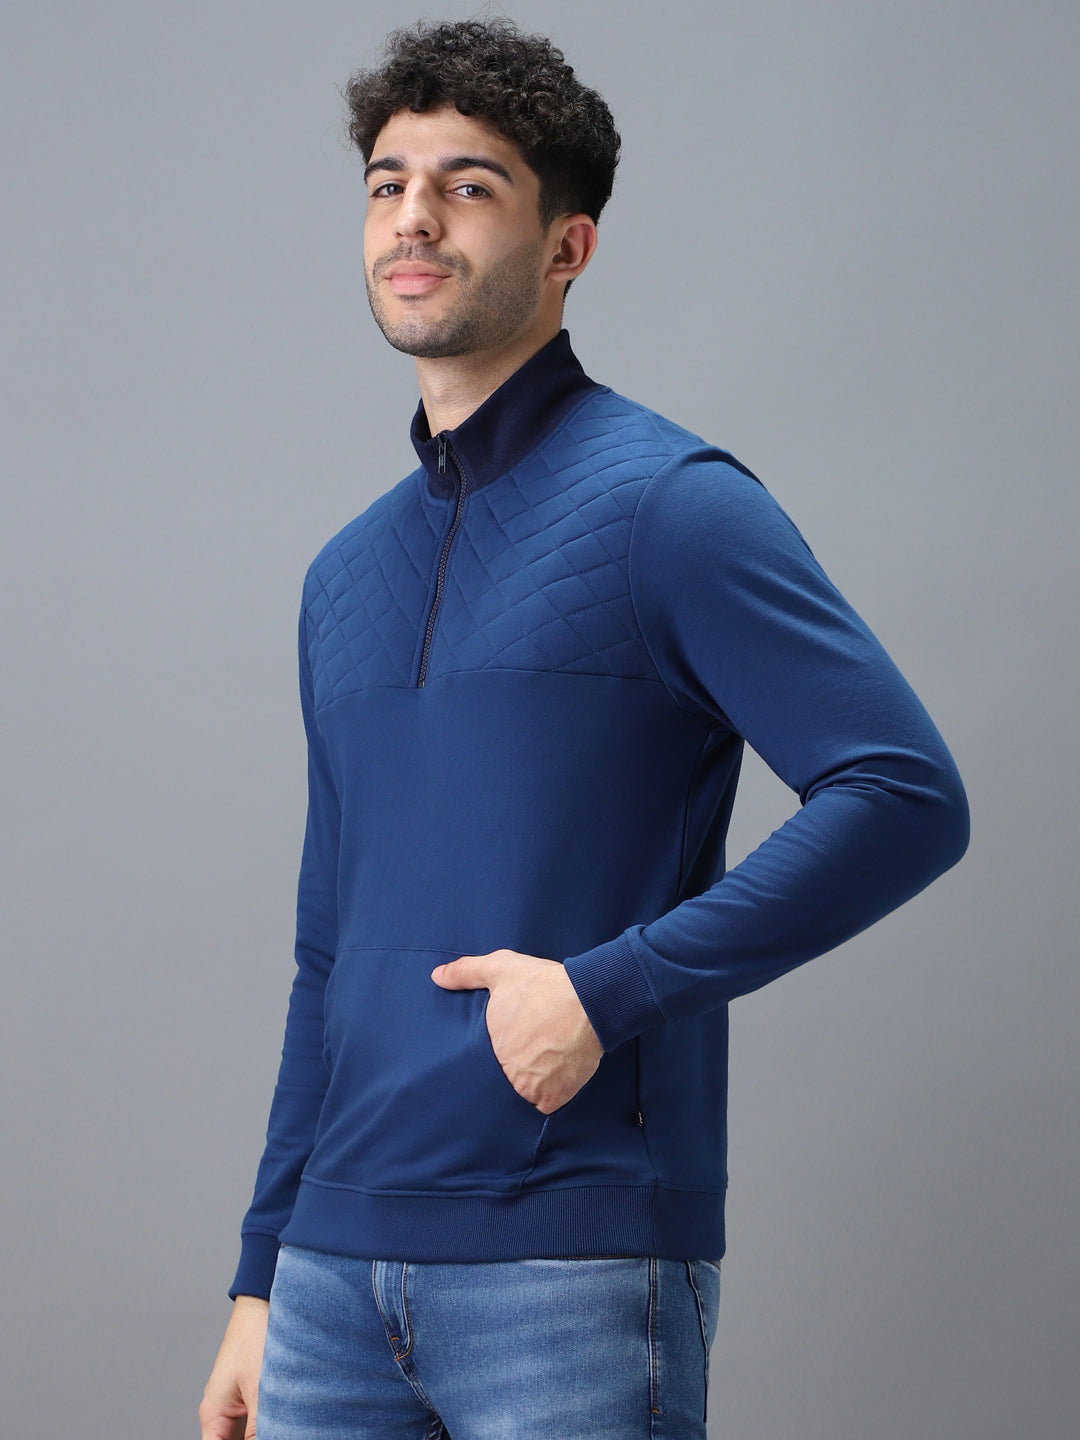 Men's Blue Cotton Solid Zippered High Neck Sweatshirt